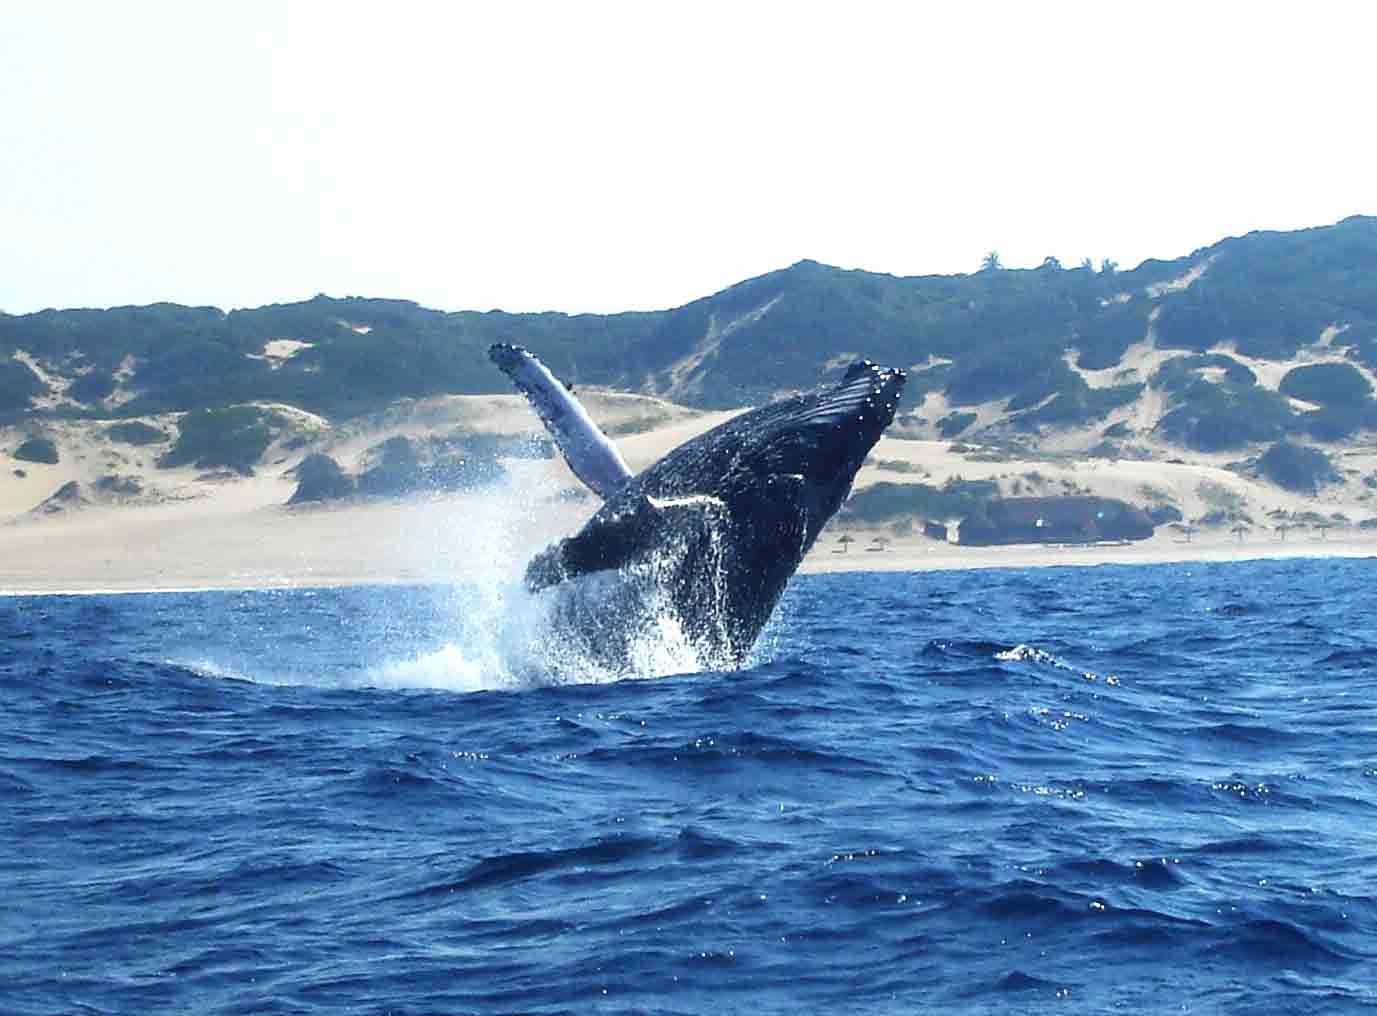 Modal: A breaching male humpback whale.